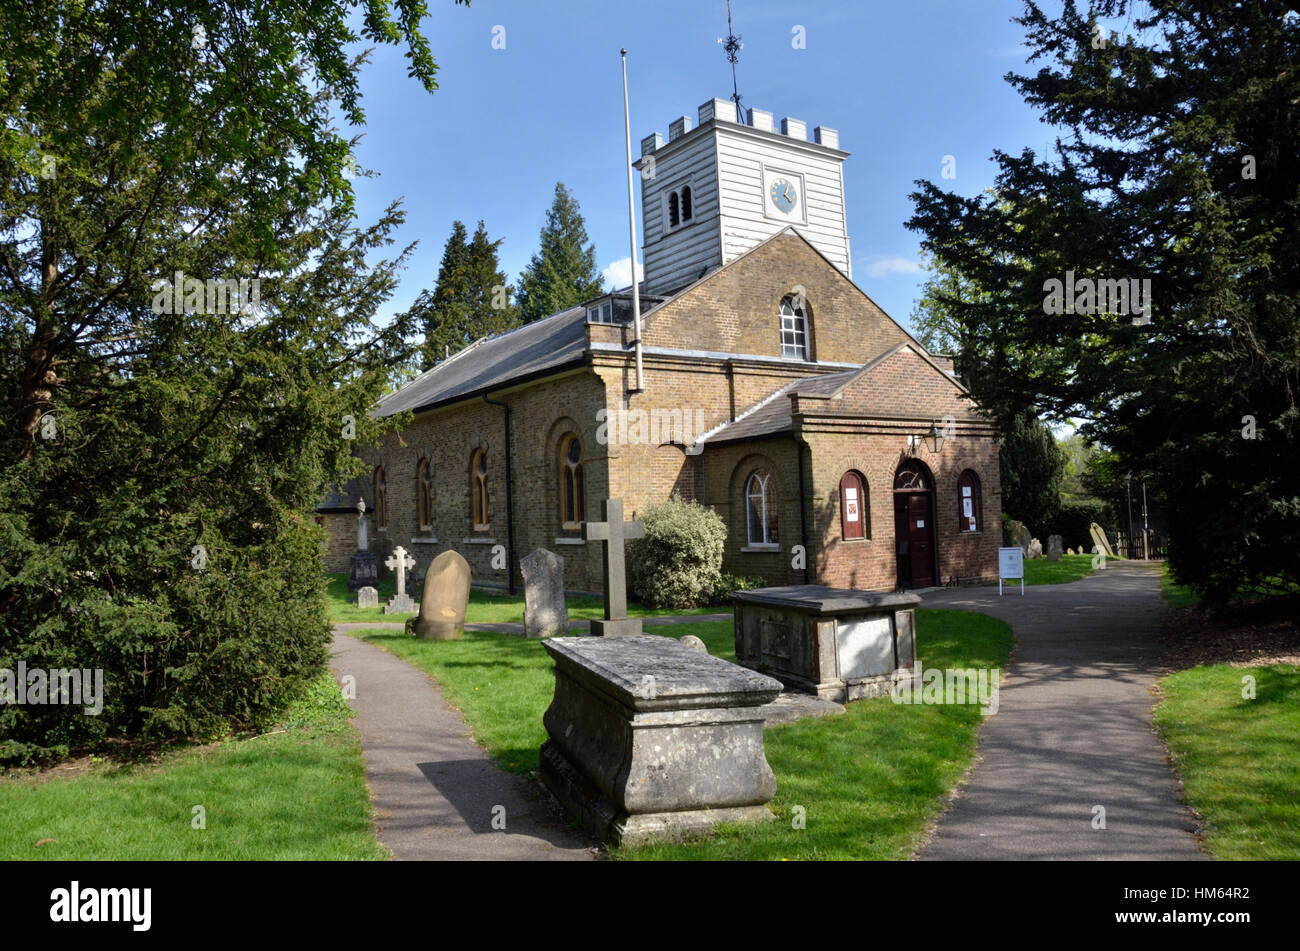 St Andrew's Parish Church Totteridge, London, UK. Stock Photo